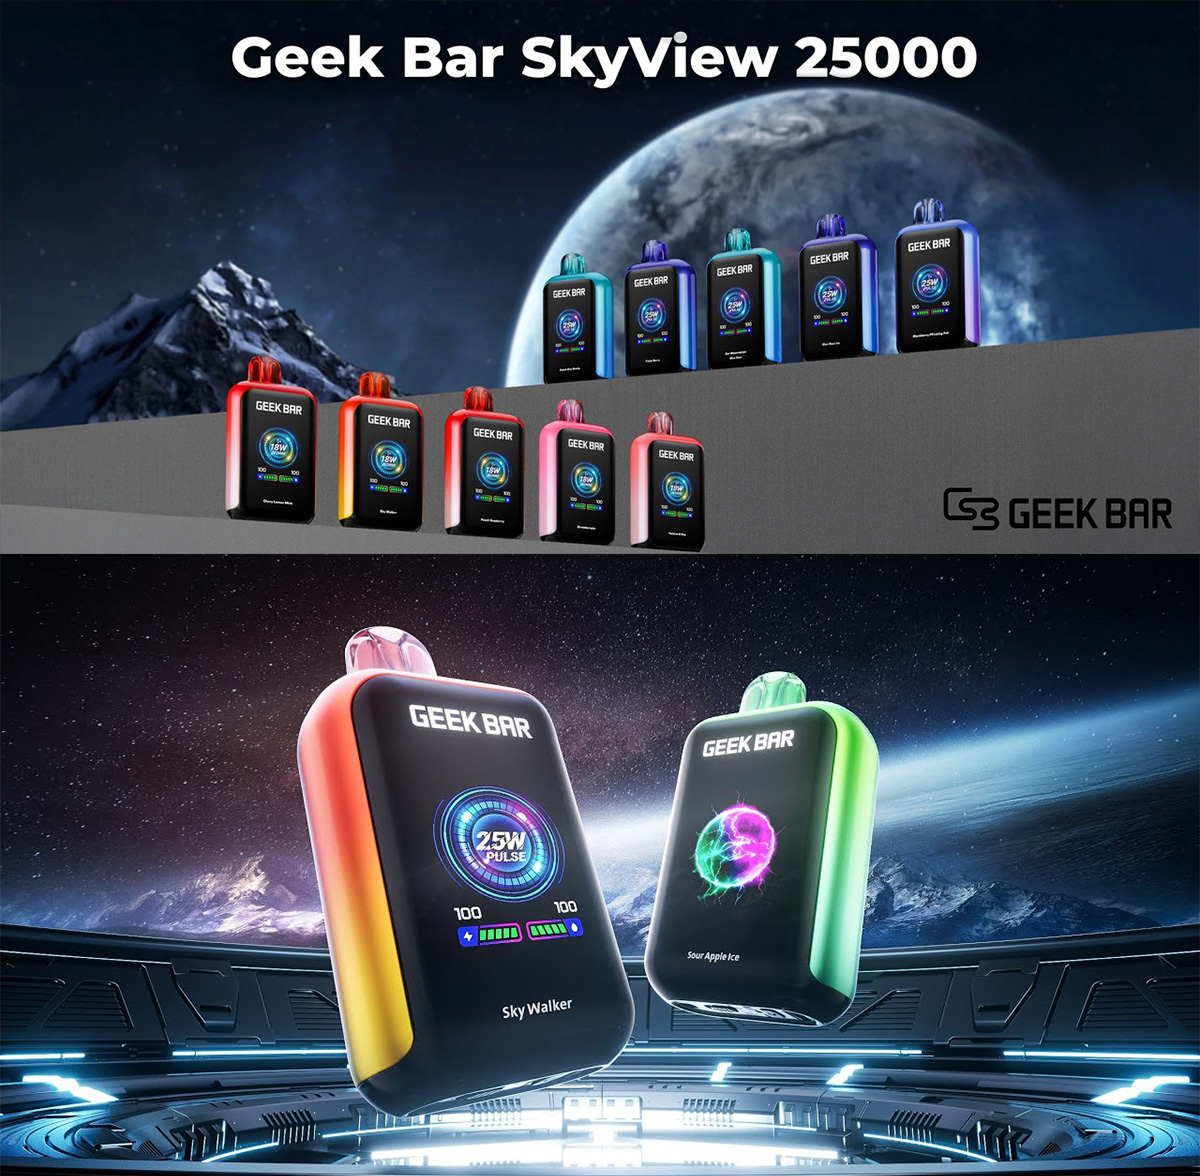 Geek Bar Skyview 25000 for sale